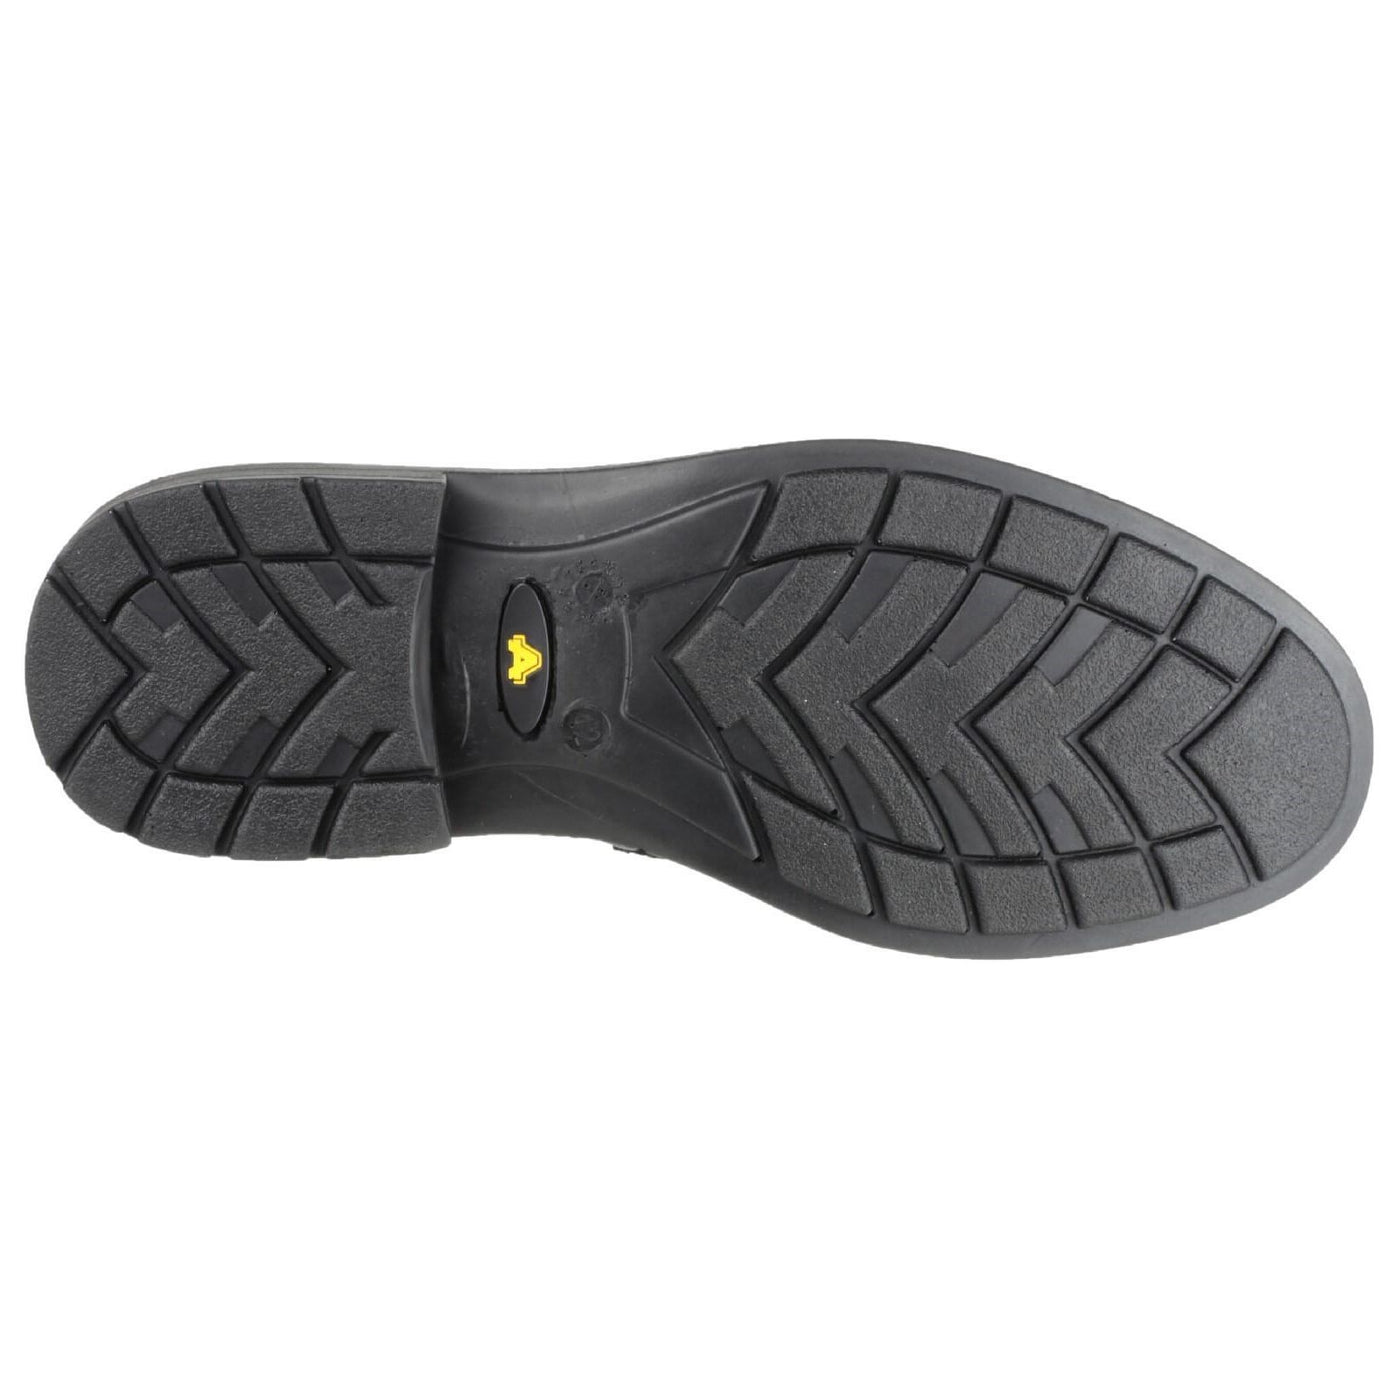 Amblers Fs46 Slip-On Steel Toe Safety Shoes - Mens - Sale